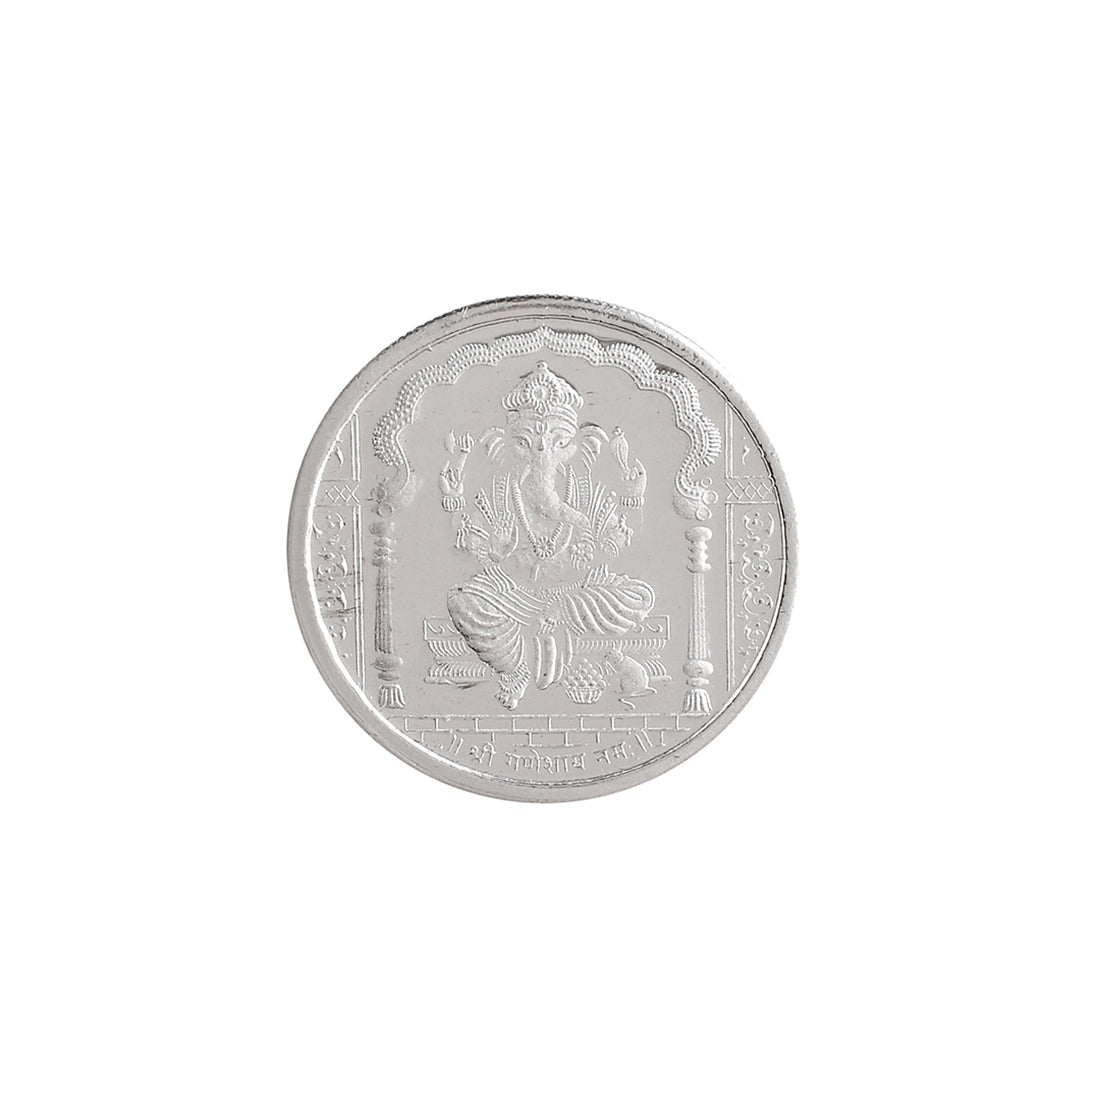 925 Sterling Silver Lord Ganesh 10 Grams Silver Coin - Voylla